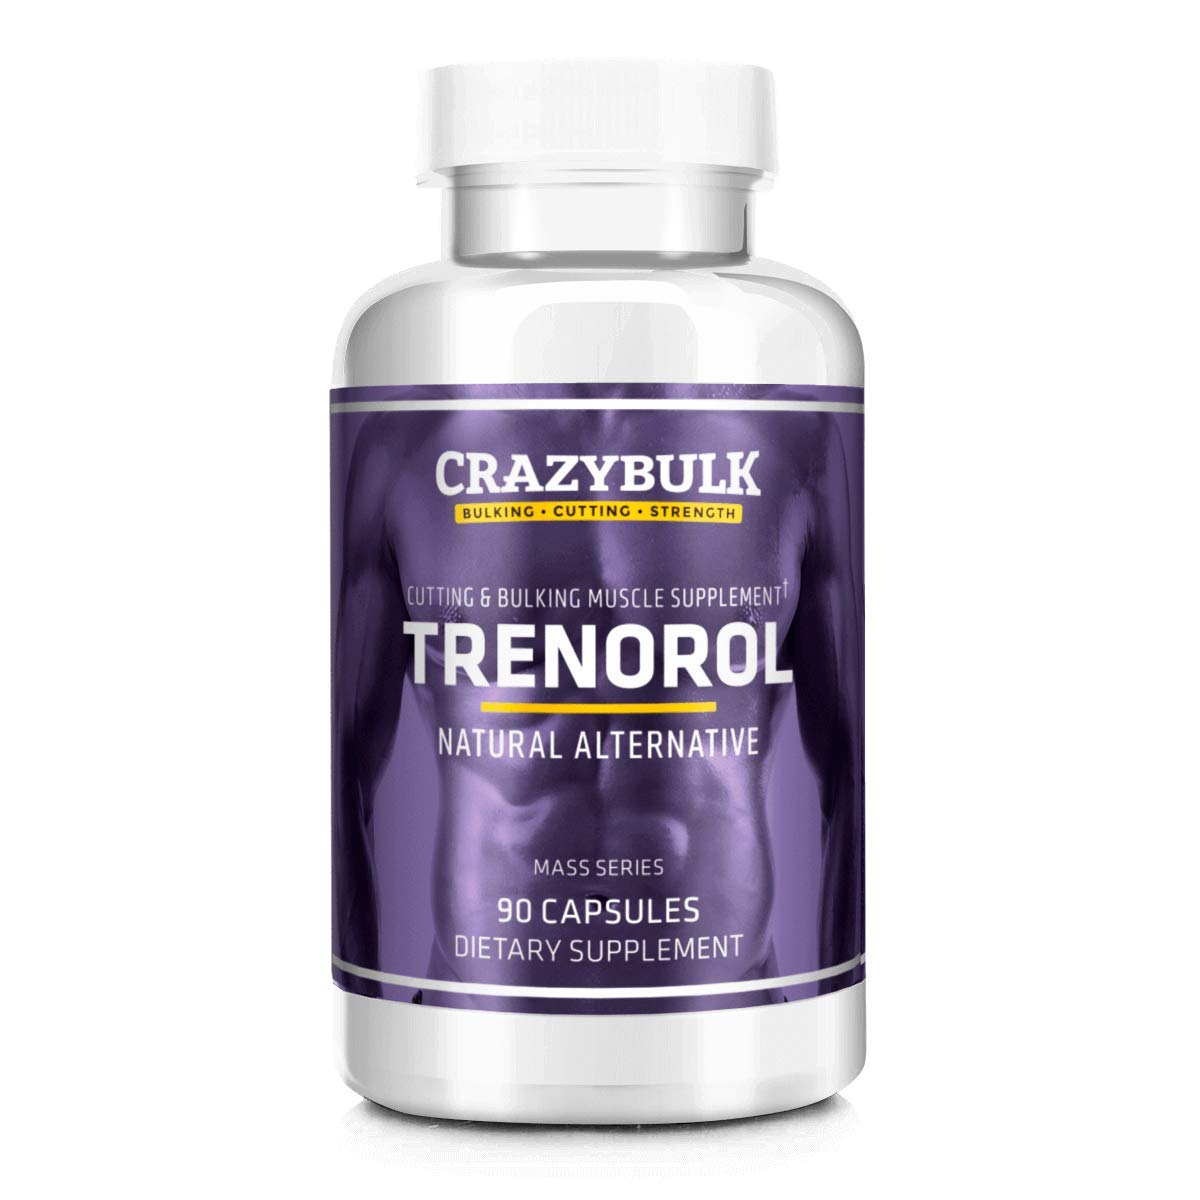 TRENOROL BOTTLE - Does Tren Affect Testosterone Levels?